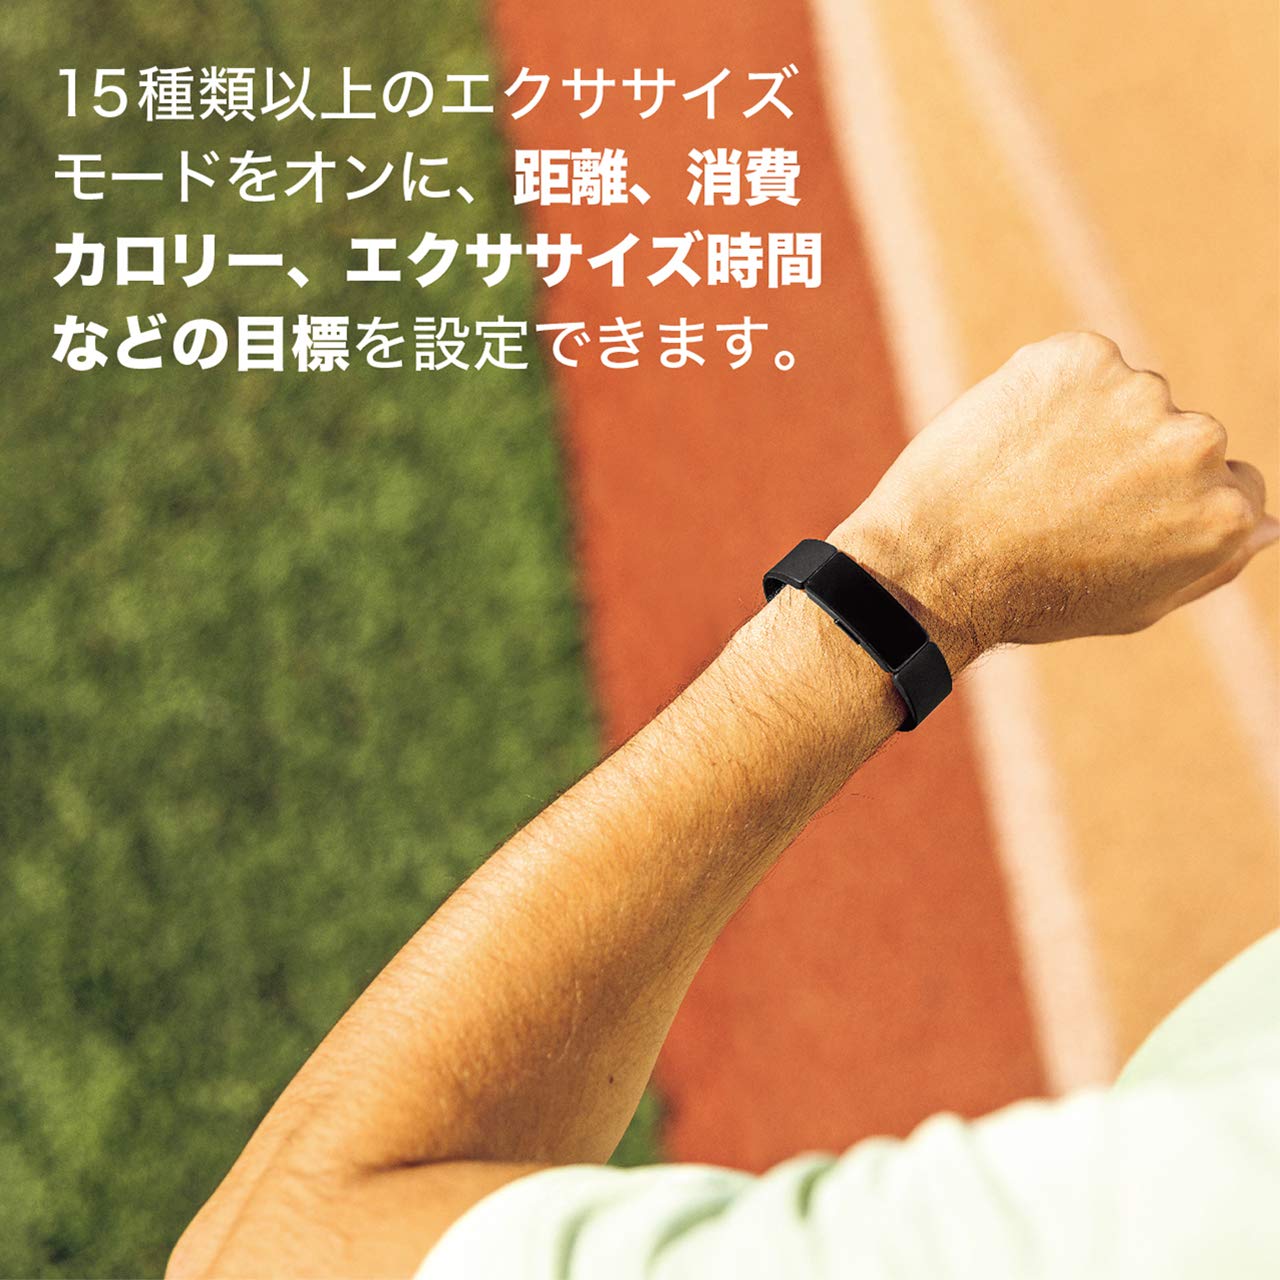 Fitbit Inspire FB413BKWT-FRCJK L/S Size Japan Import  - Very Good